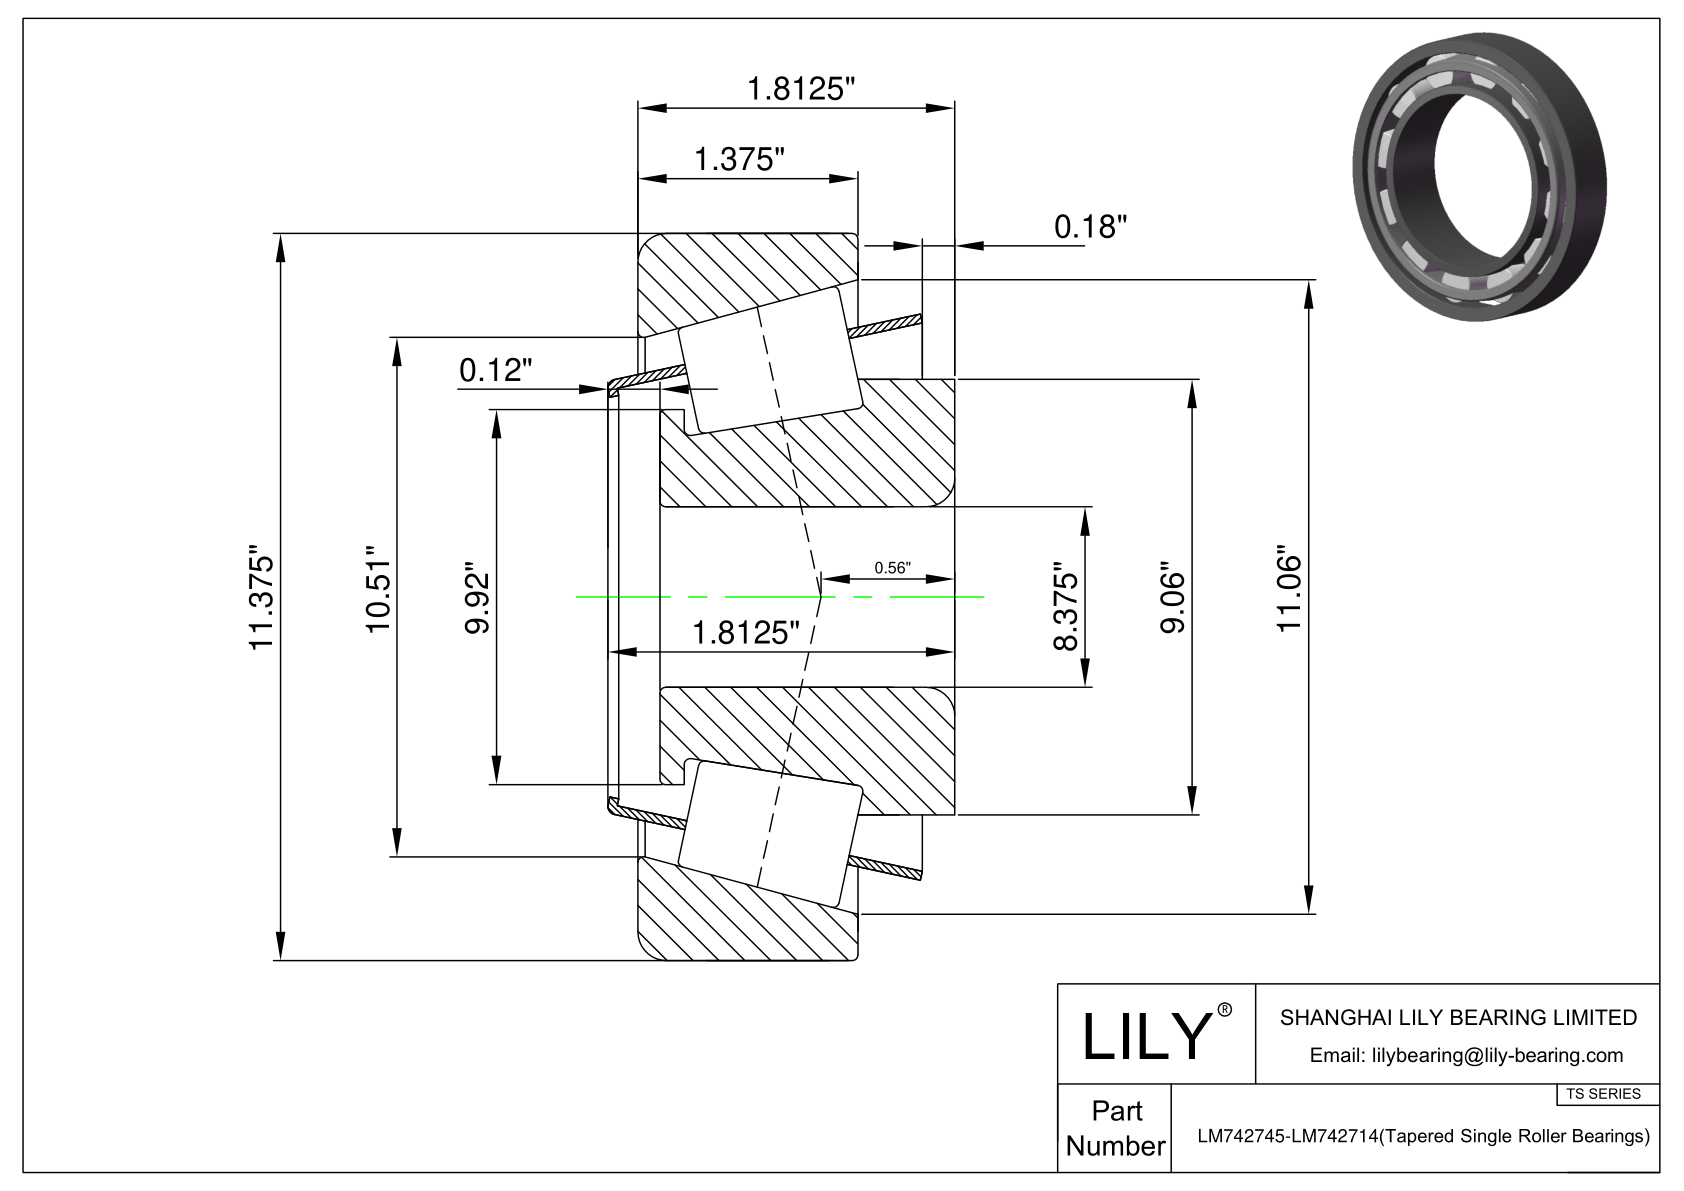 LM742745-LM742714 TS系列(圆锥单滚子轴承)(英制) CAD图形